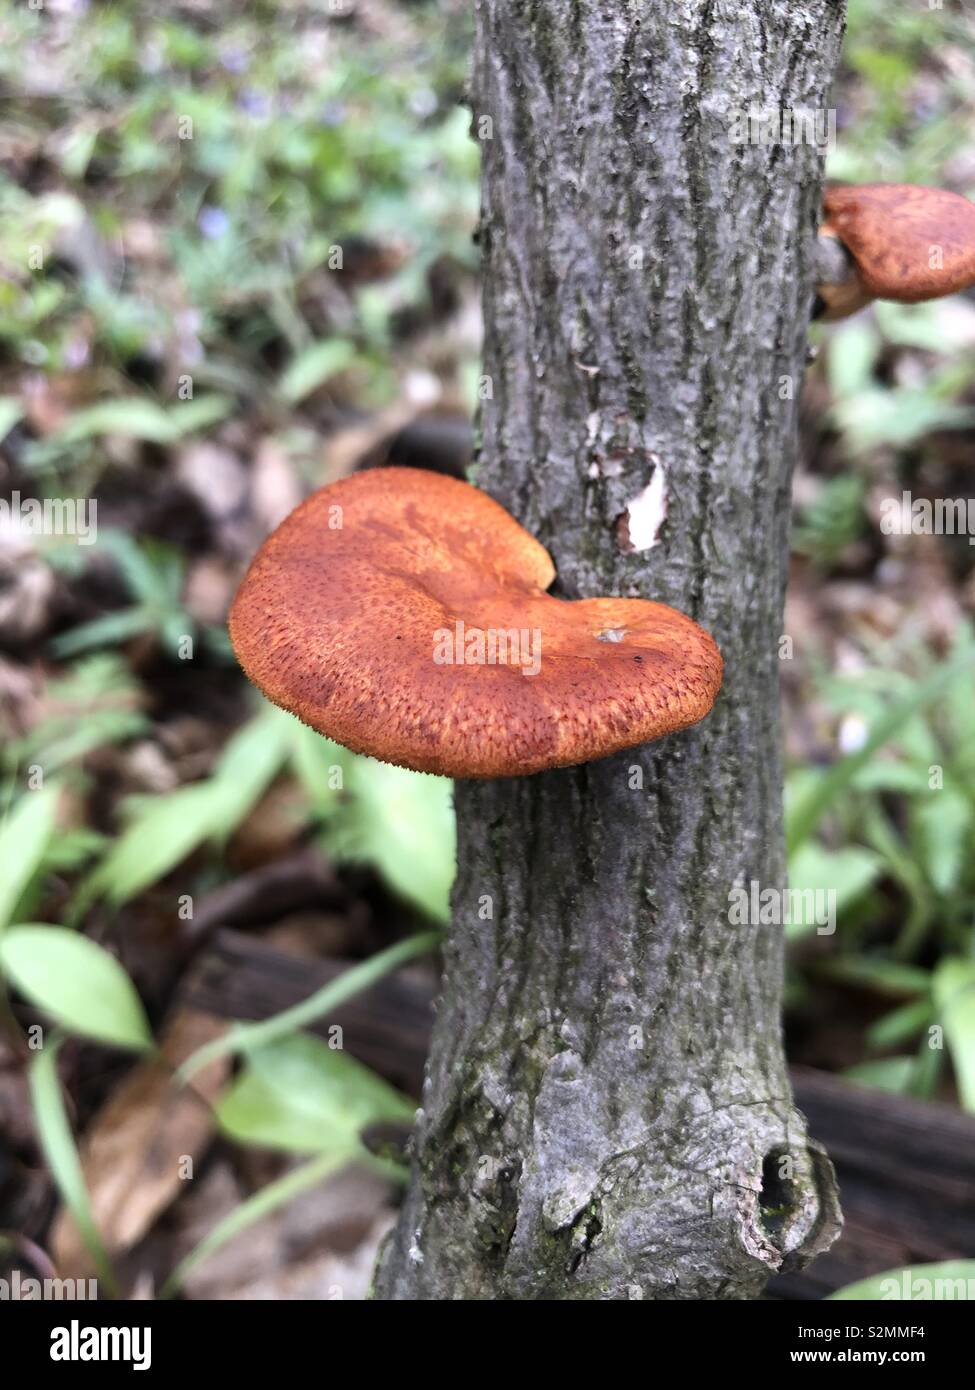 Orange fungus on tree Stock Photo